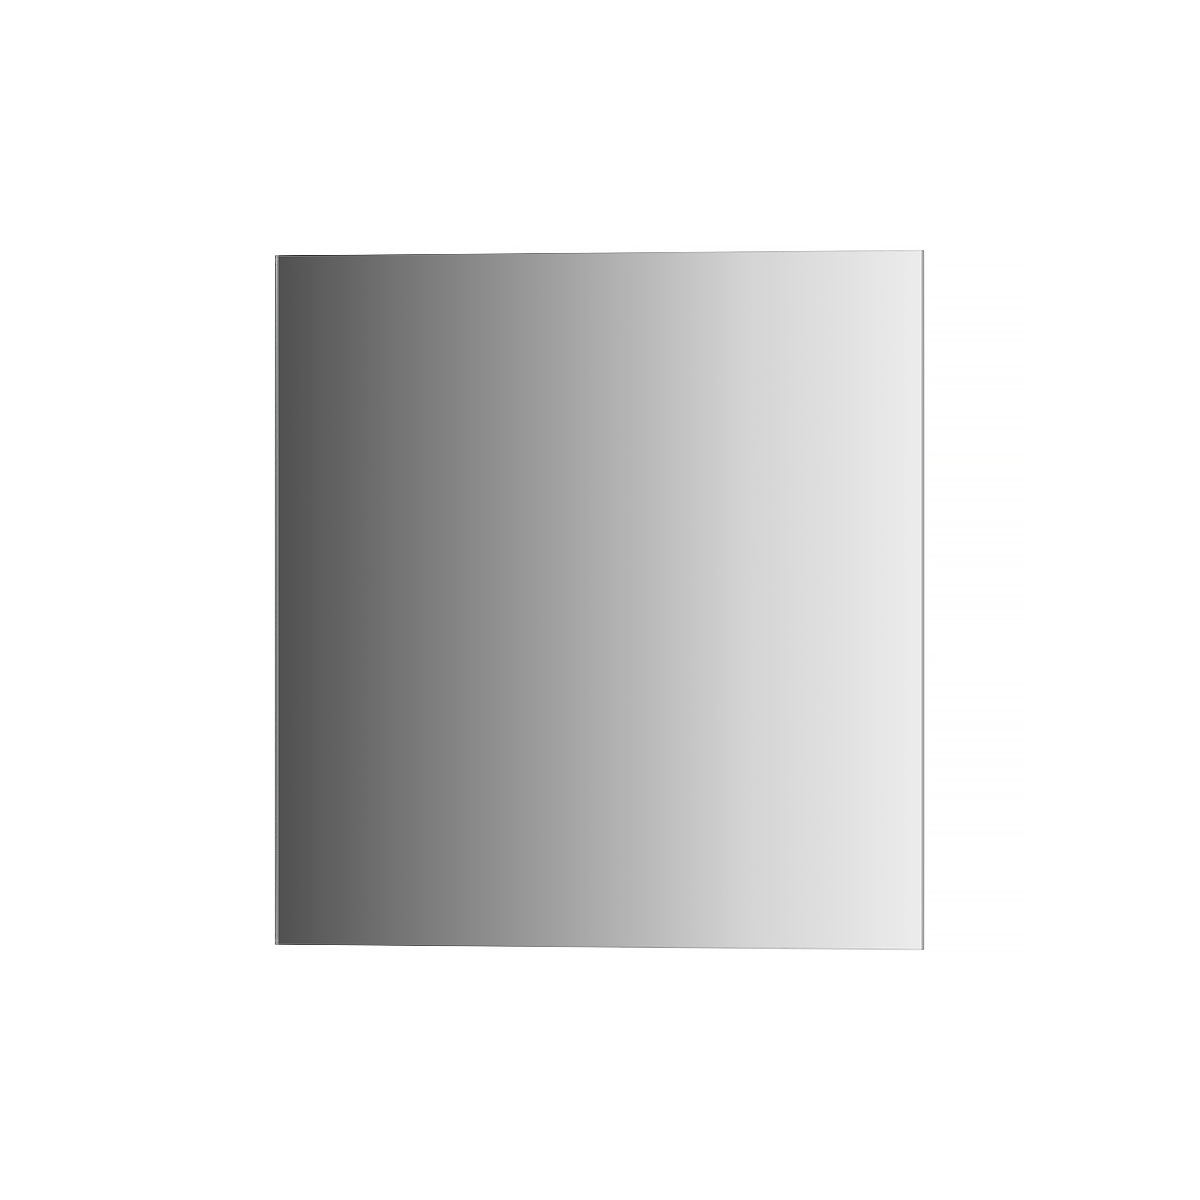 Зеркальная плитка со шлифованной кромкой  Evoform BY 1407 25x25см зеркальная плитка mirox 3g sensea nnlm24 квадратная 10x10 см глянцевая серебро 1 шт